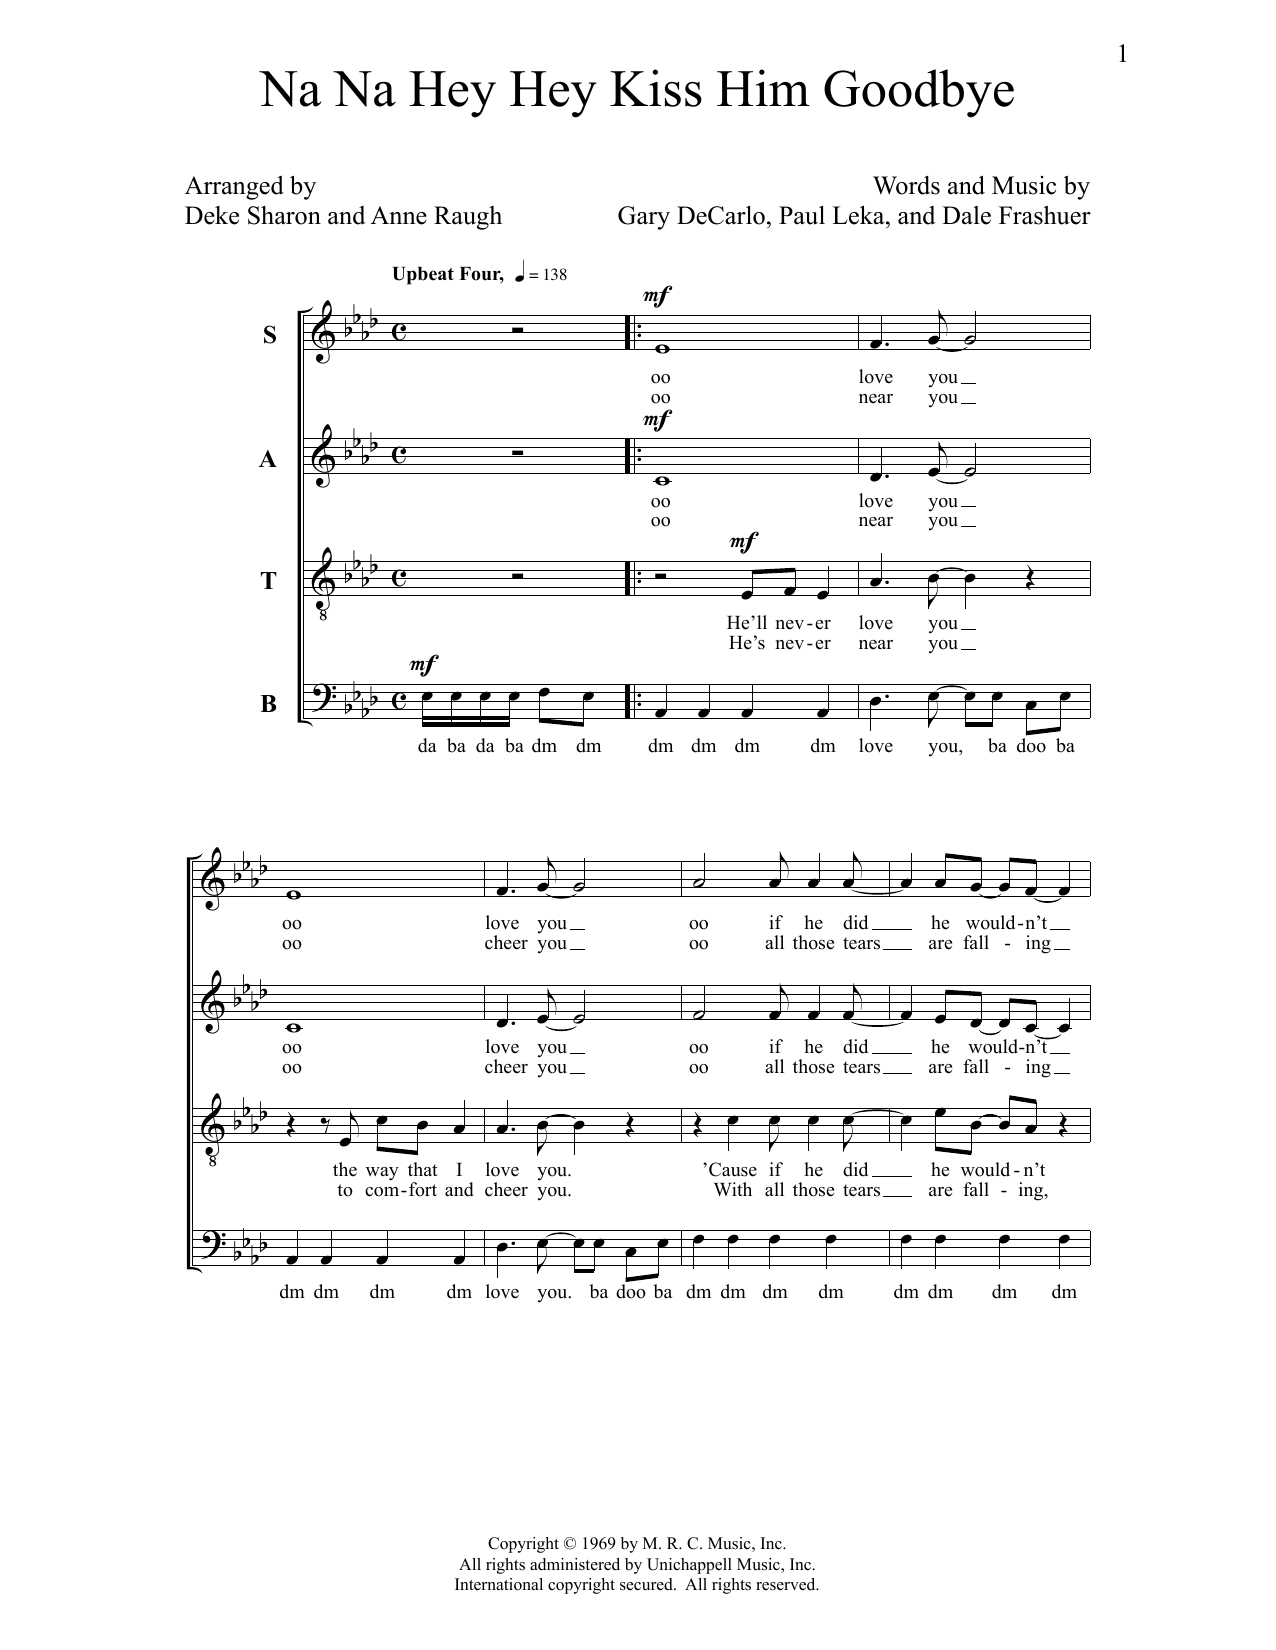 Download Deke Sharon Na Na Hey Hey Kiss Him Goodbye Sheet Music and learn how to play SATB Choir PDF digital score in minutes